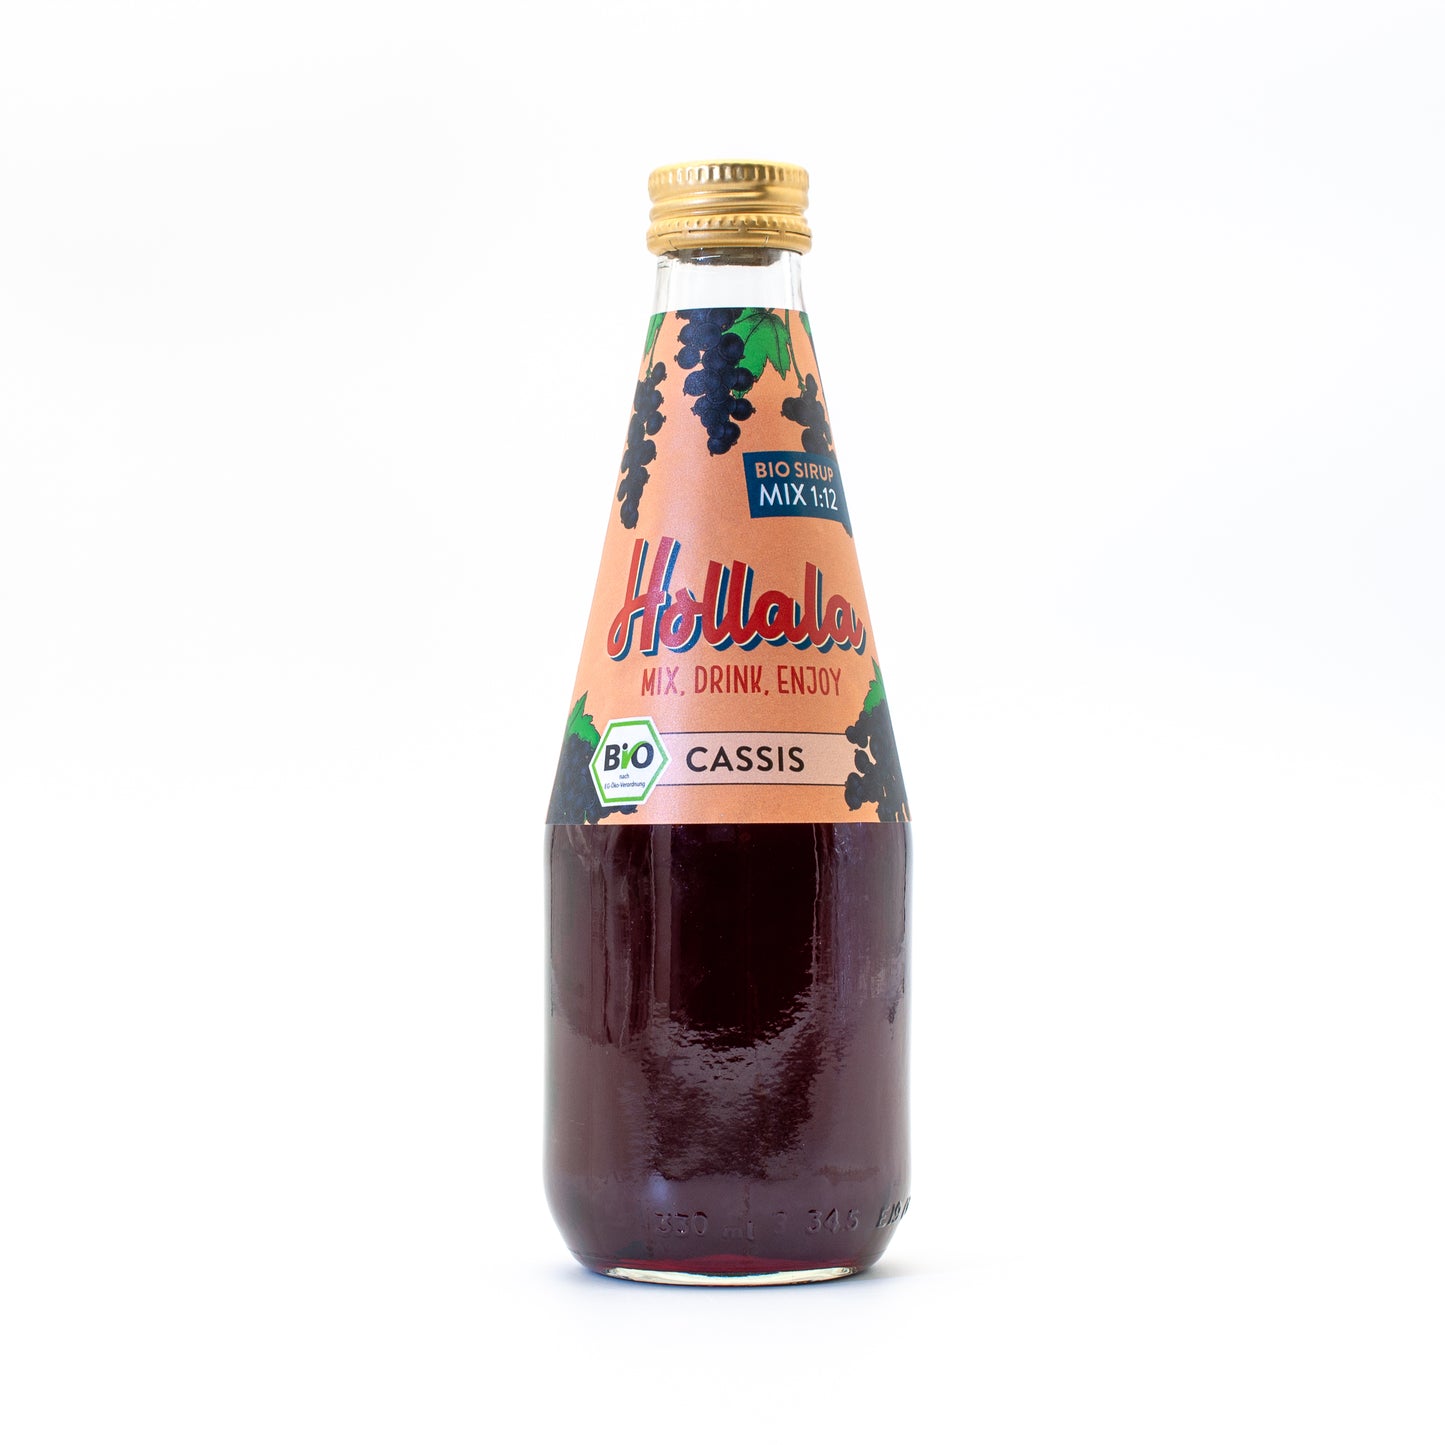 HOLLALA - Bio Sirup Cassis 330ml - Hollala - mix.drink.enjoy!